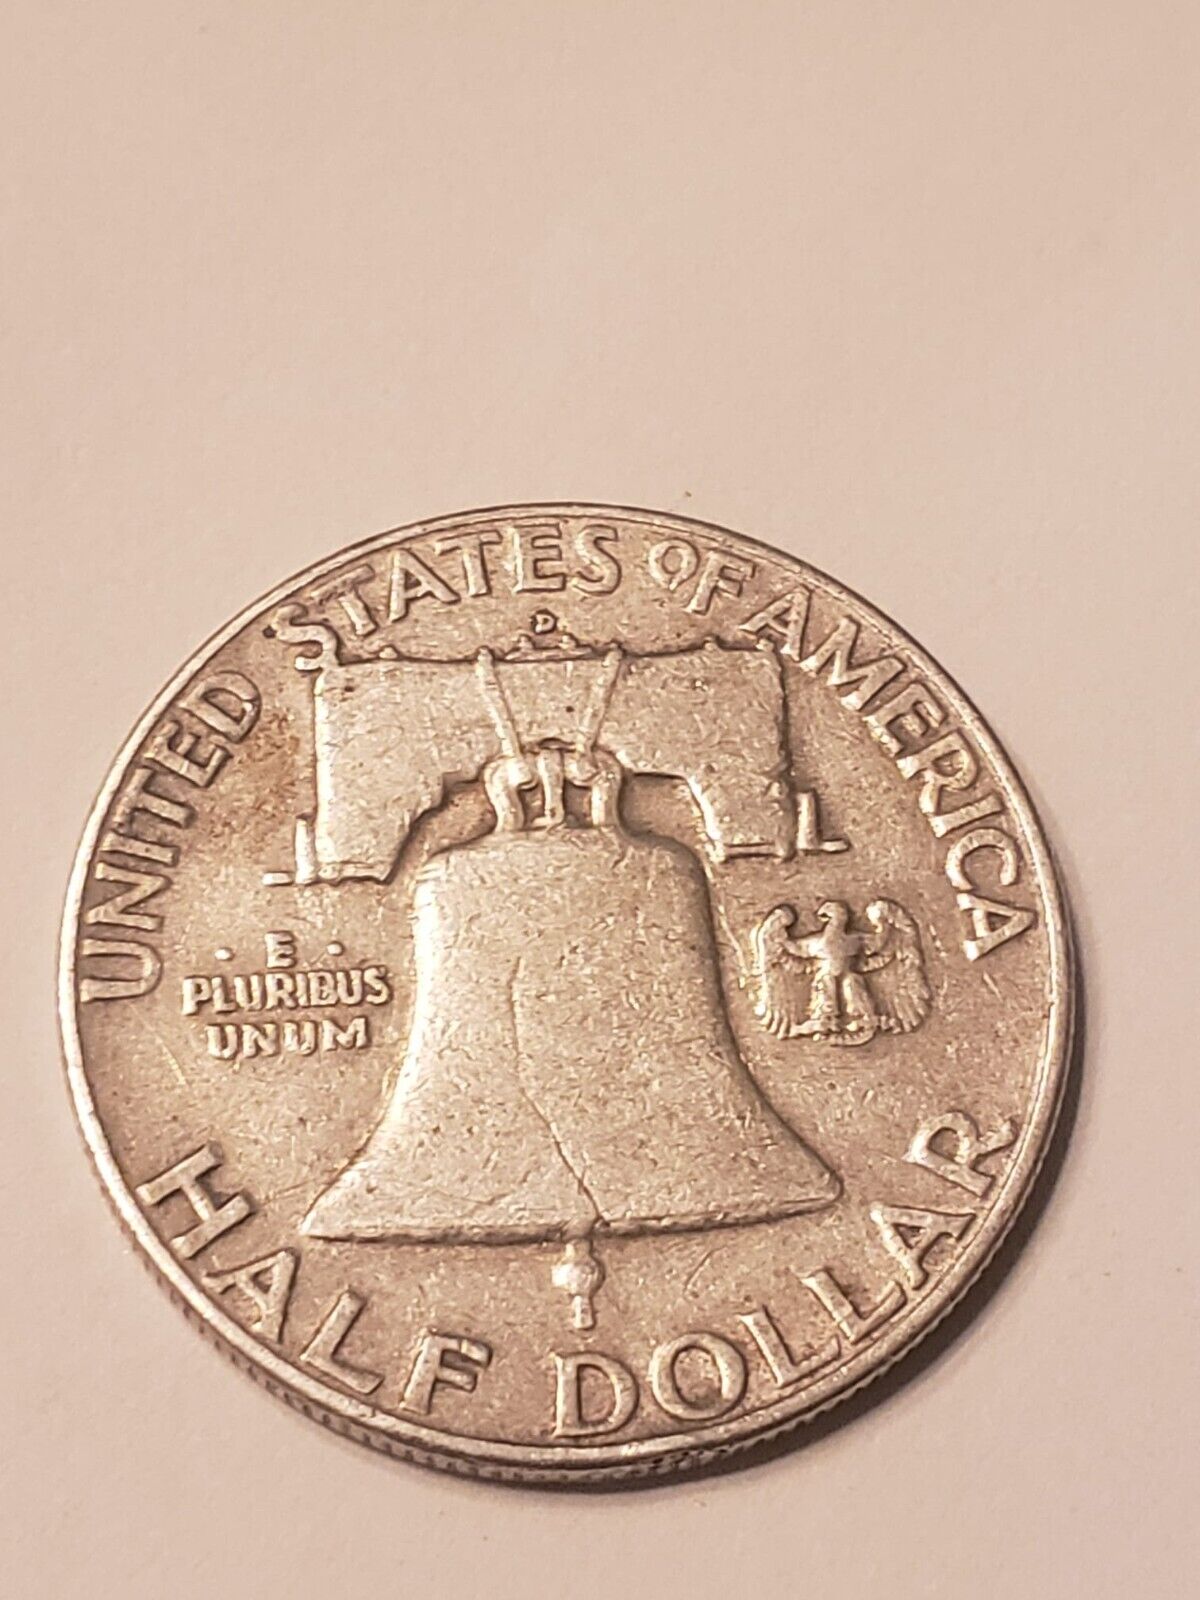 USA Silver Half Dollar Franklin 1960 D in a good condition.(CB9a3)